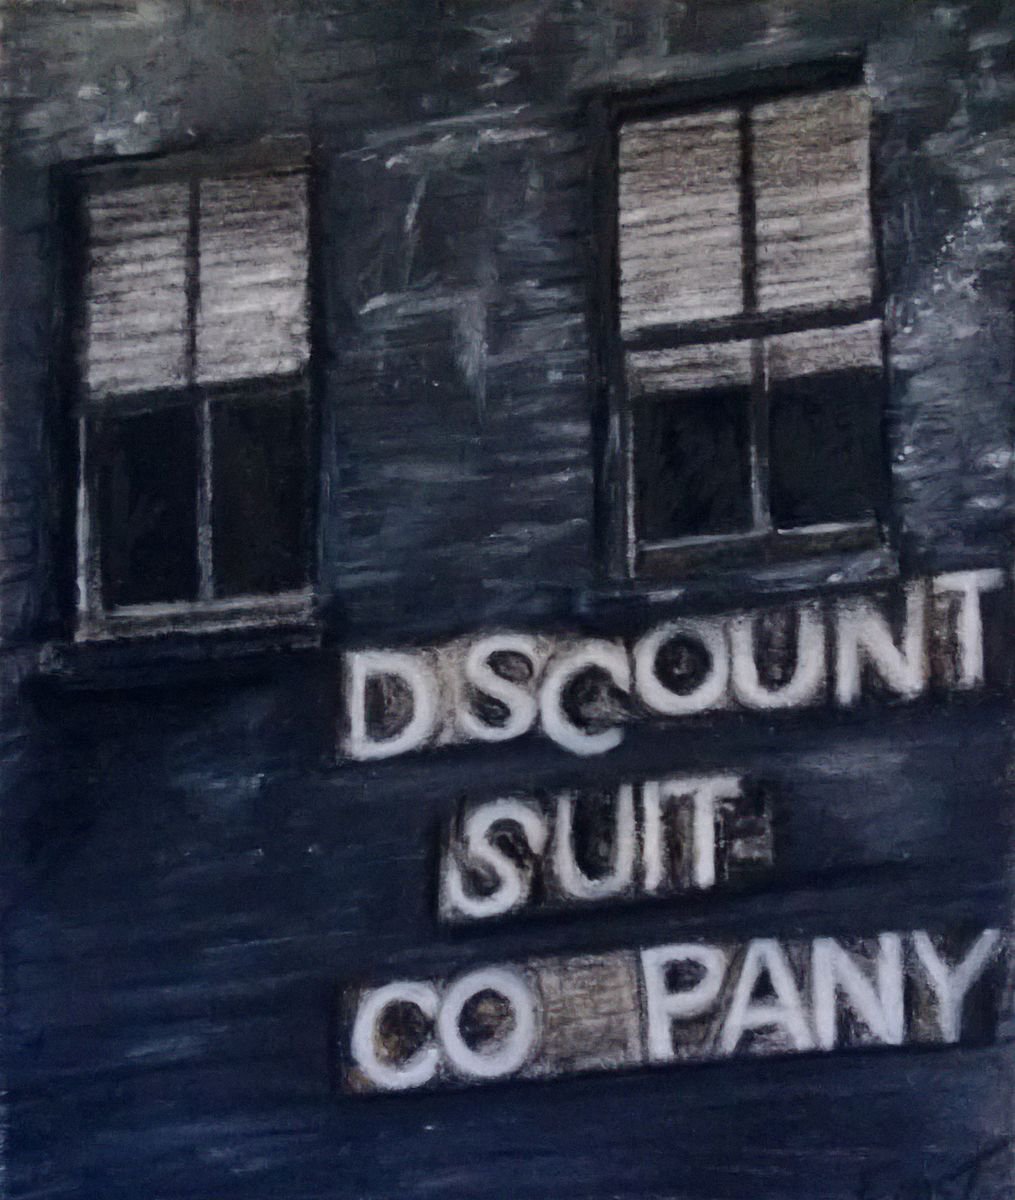 Discount Suit Company by Elizabeth Nast